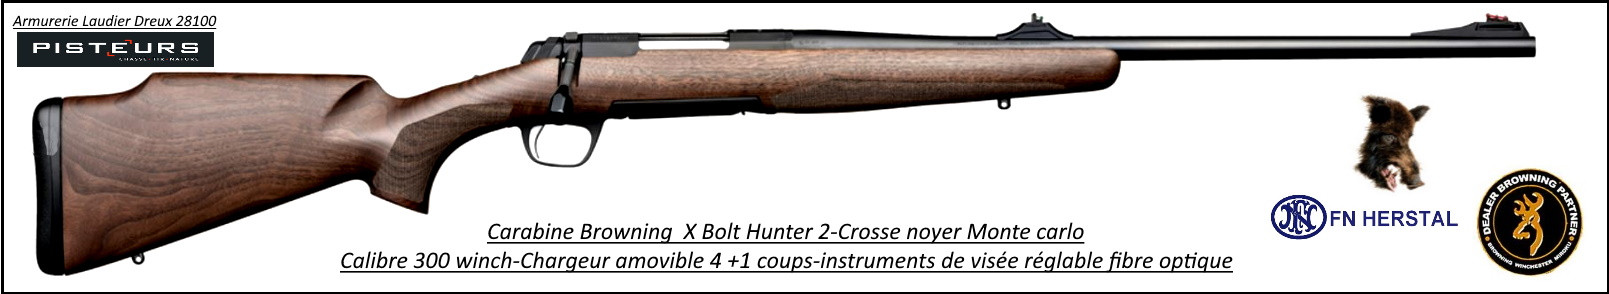 Browning X BOLT Hunter 2 Calibre 300 winch mag Crosse noyer monte carlo  + instruments de visée- Promotion -Ref 37954